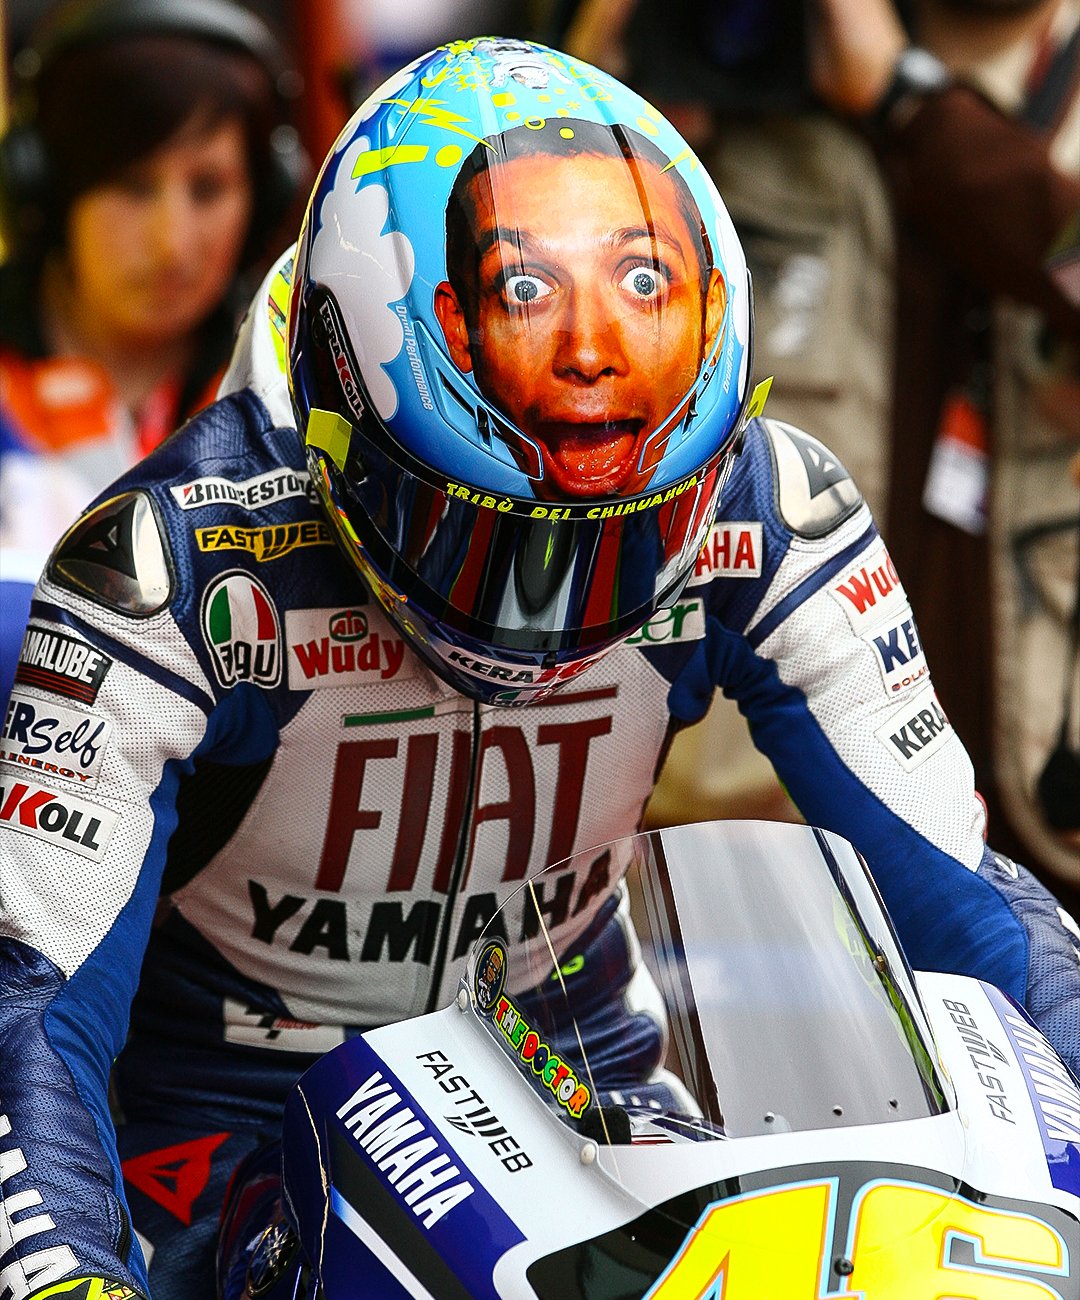 laver mad Hellere anspore Crash MotoGP on X: "That iconic Mugello helmet design from Valentino Rossi  🤩 #MotoGP #ItalianGP https://t.co/P5TqMDBdVj" / X